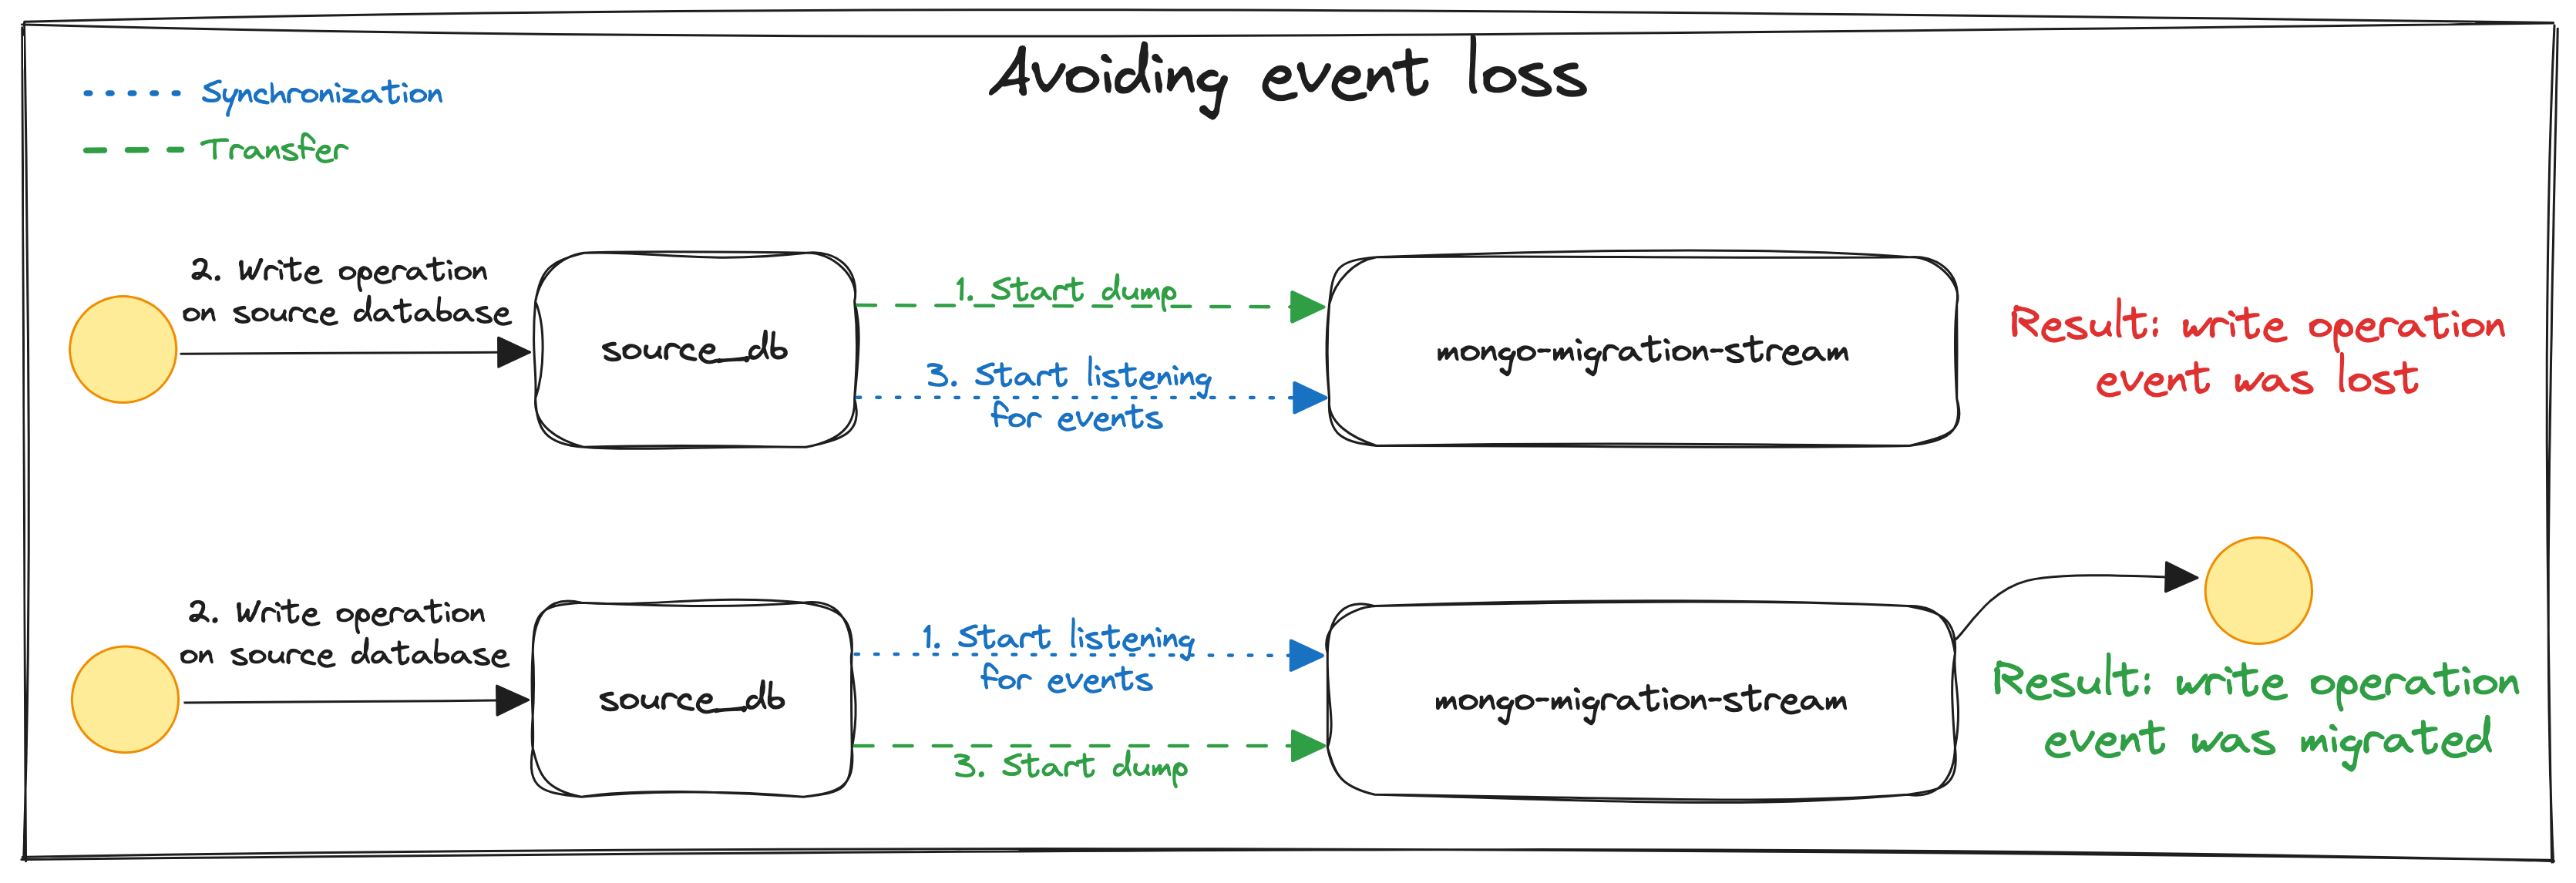 Avoiding event loss